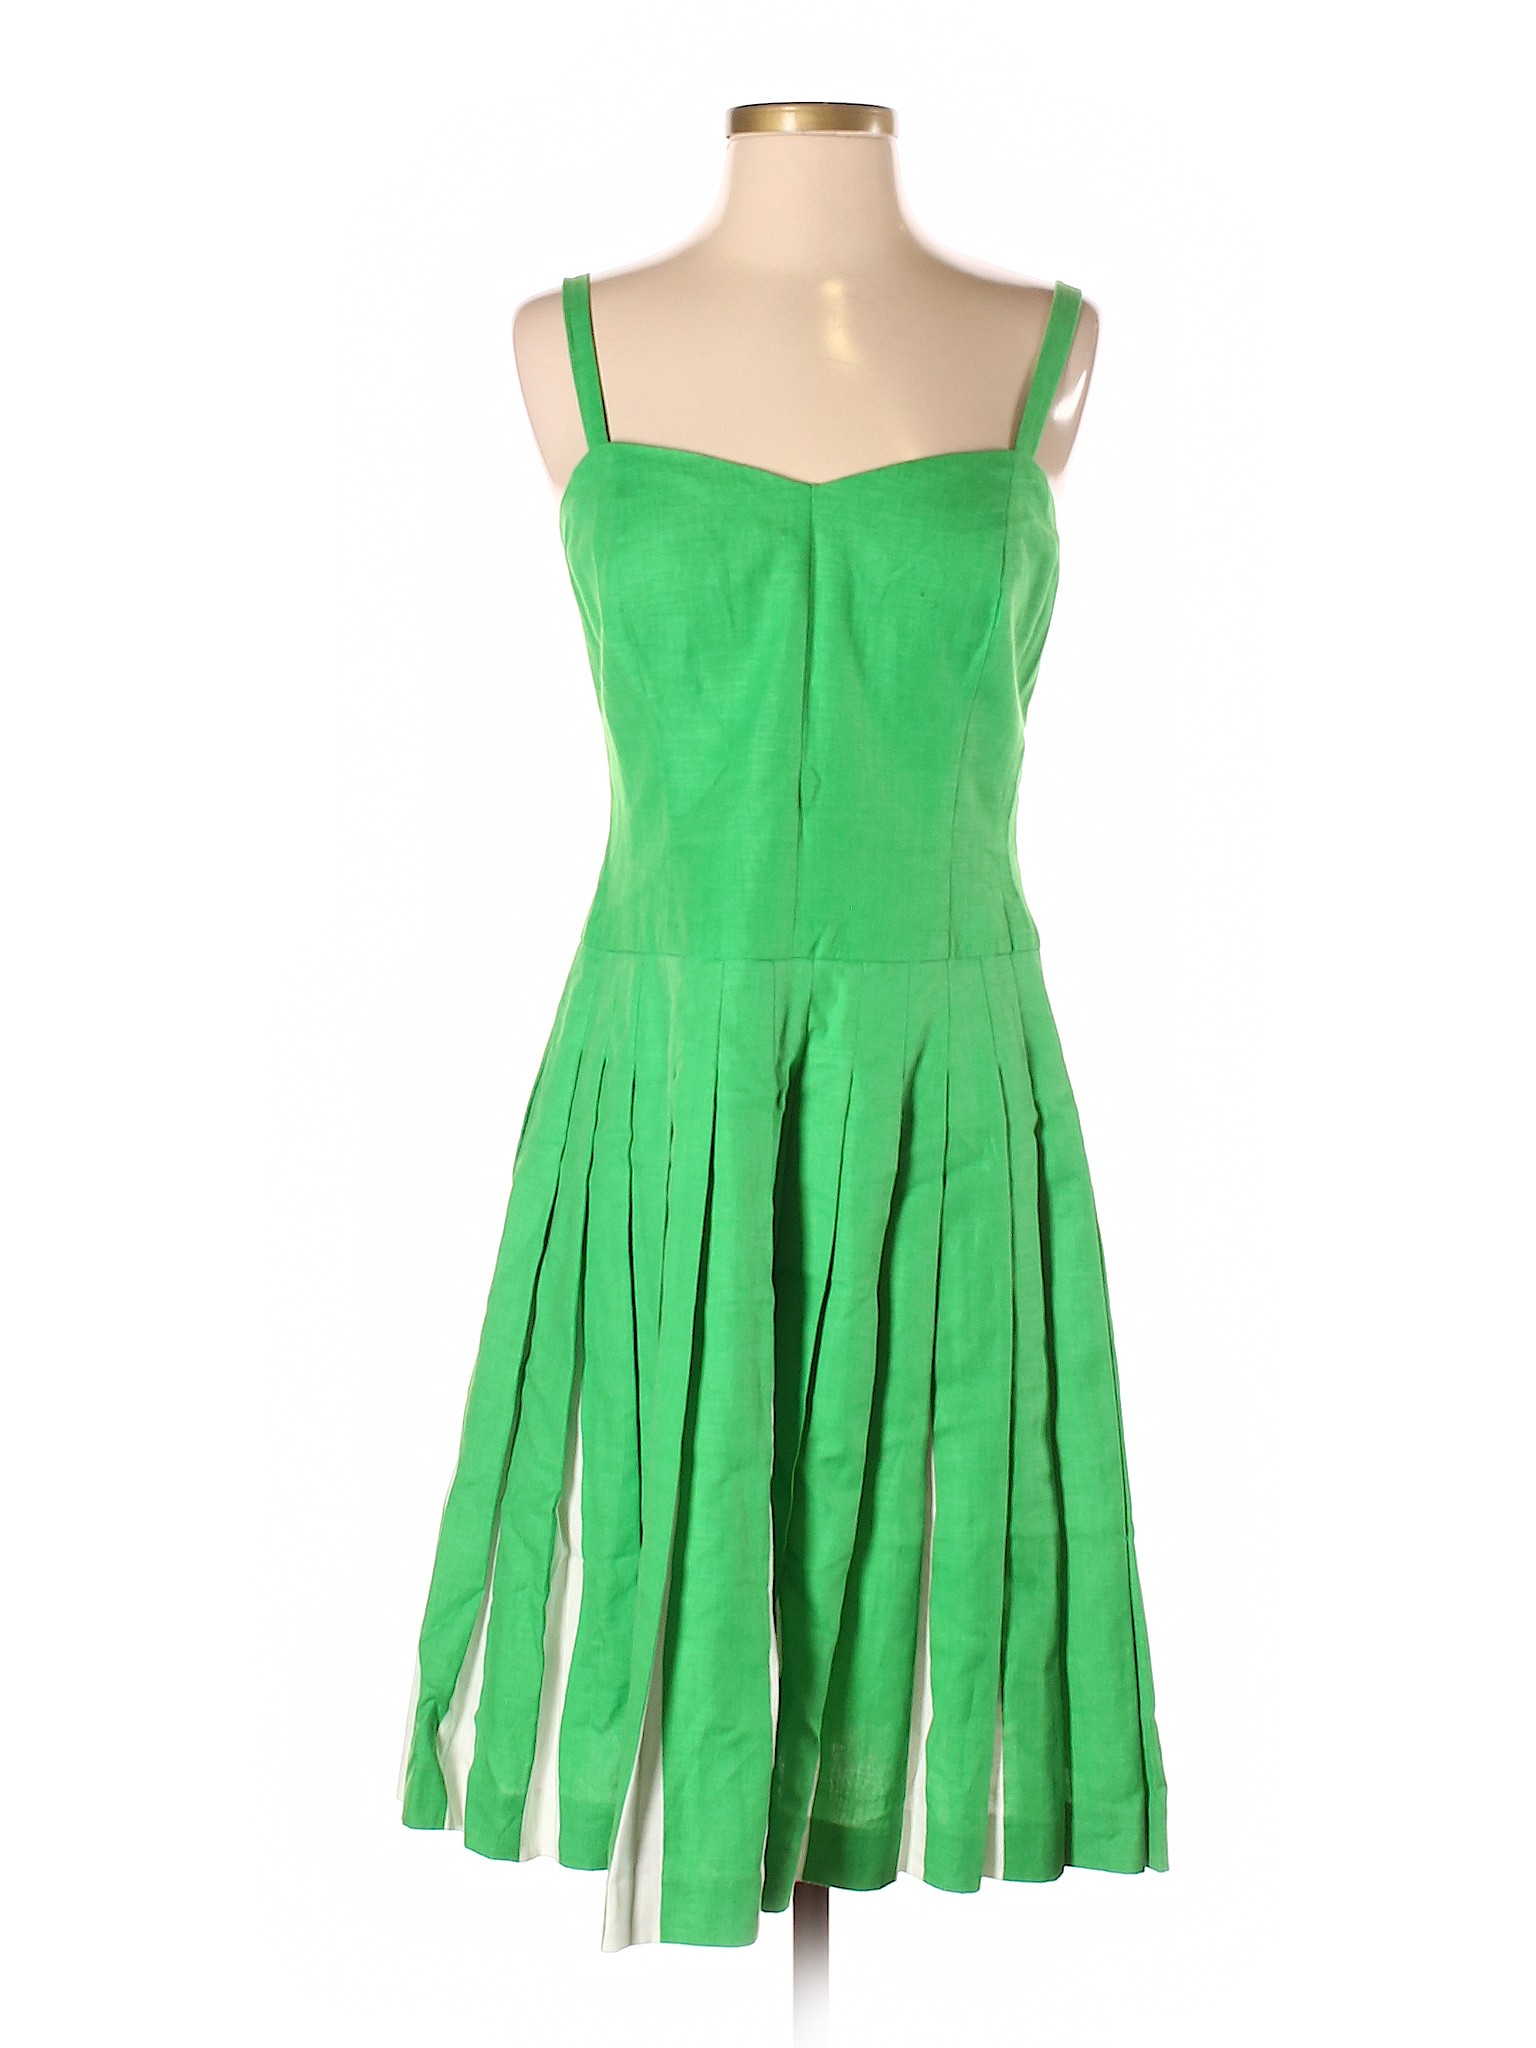 Boden Women Green Casual Dress 4 | eBay